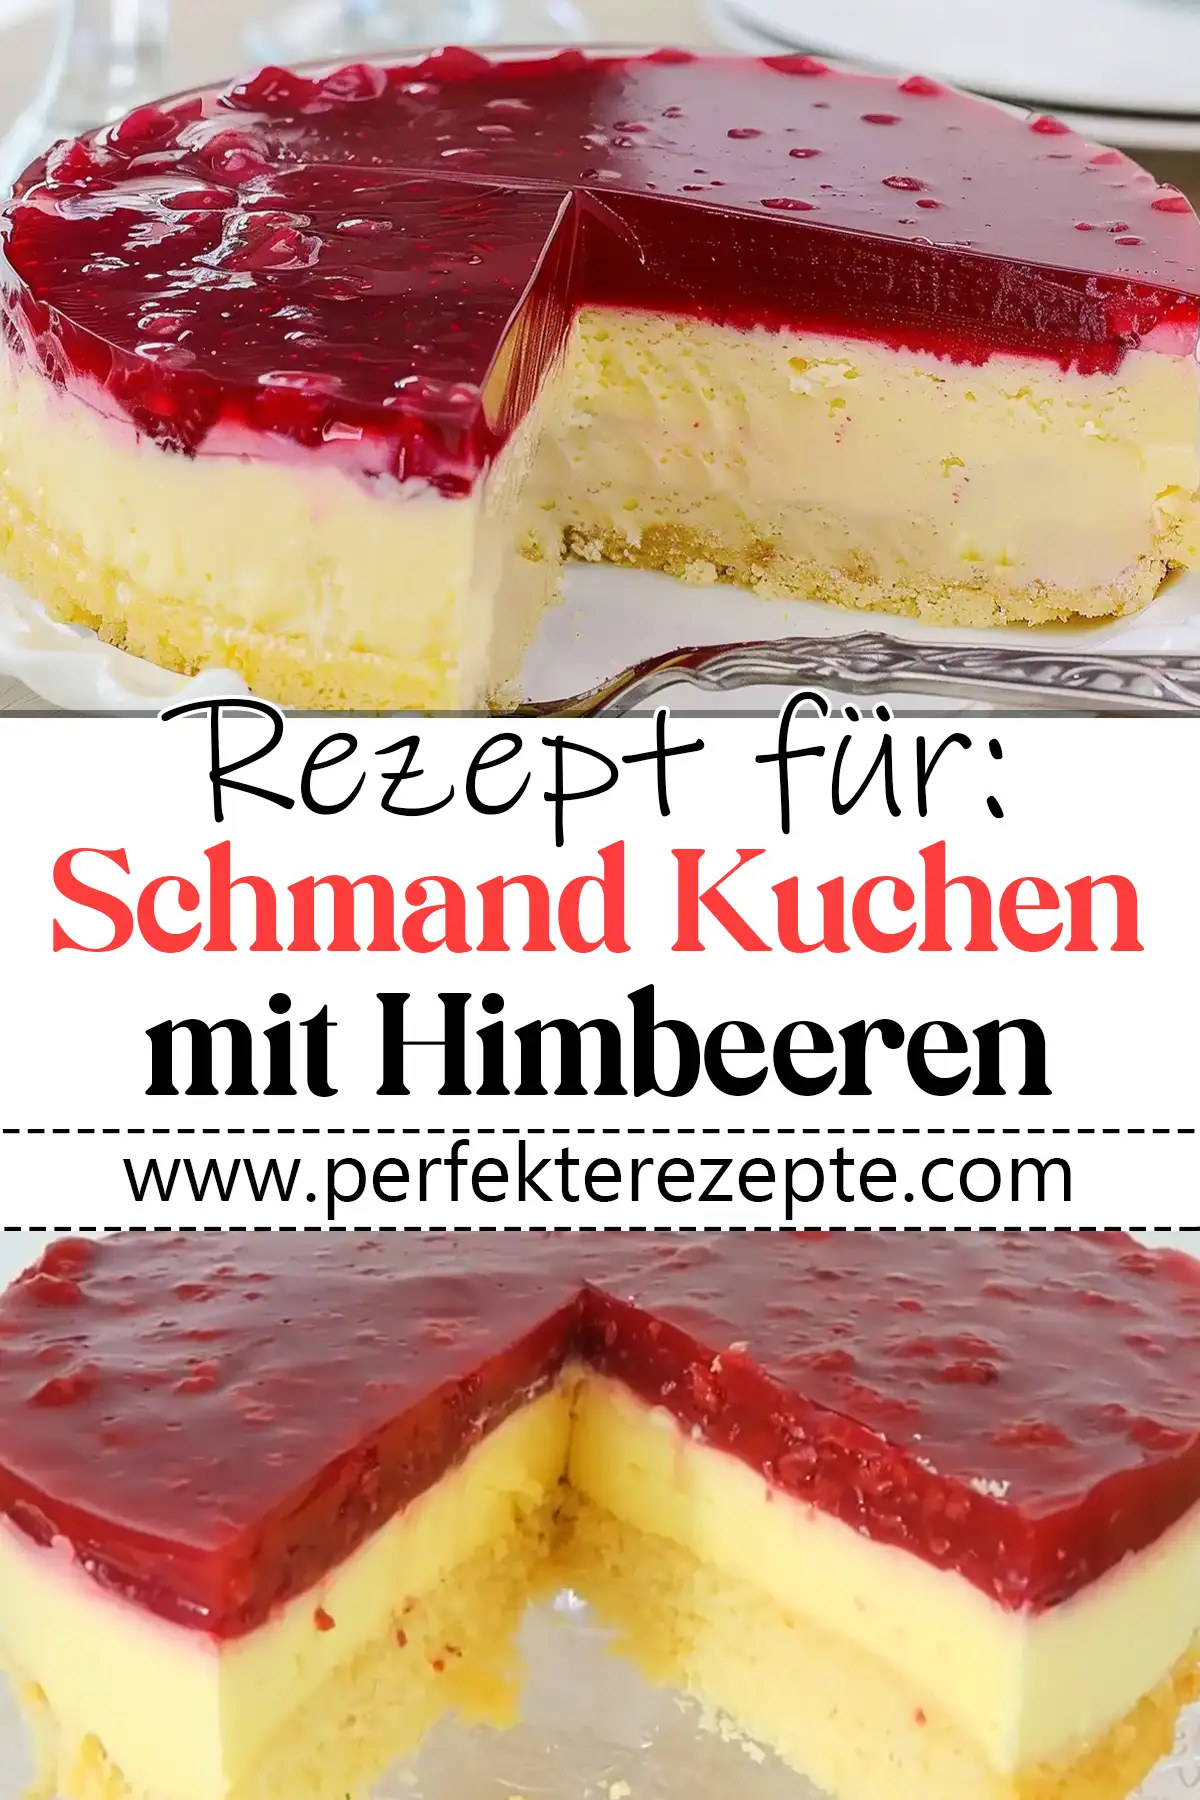 Himbeer Schmand Kuchen Rezept